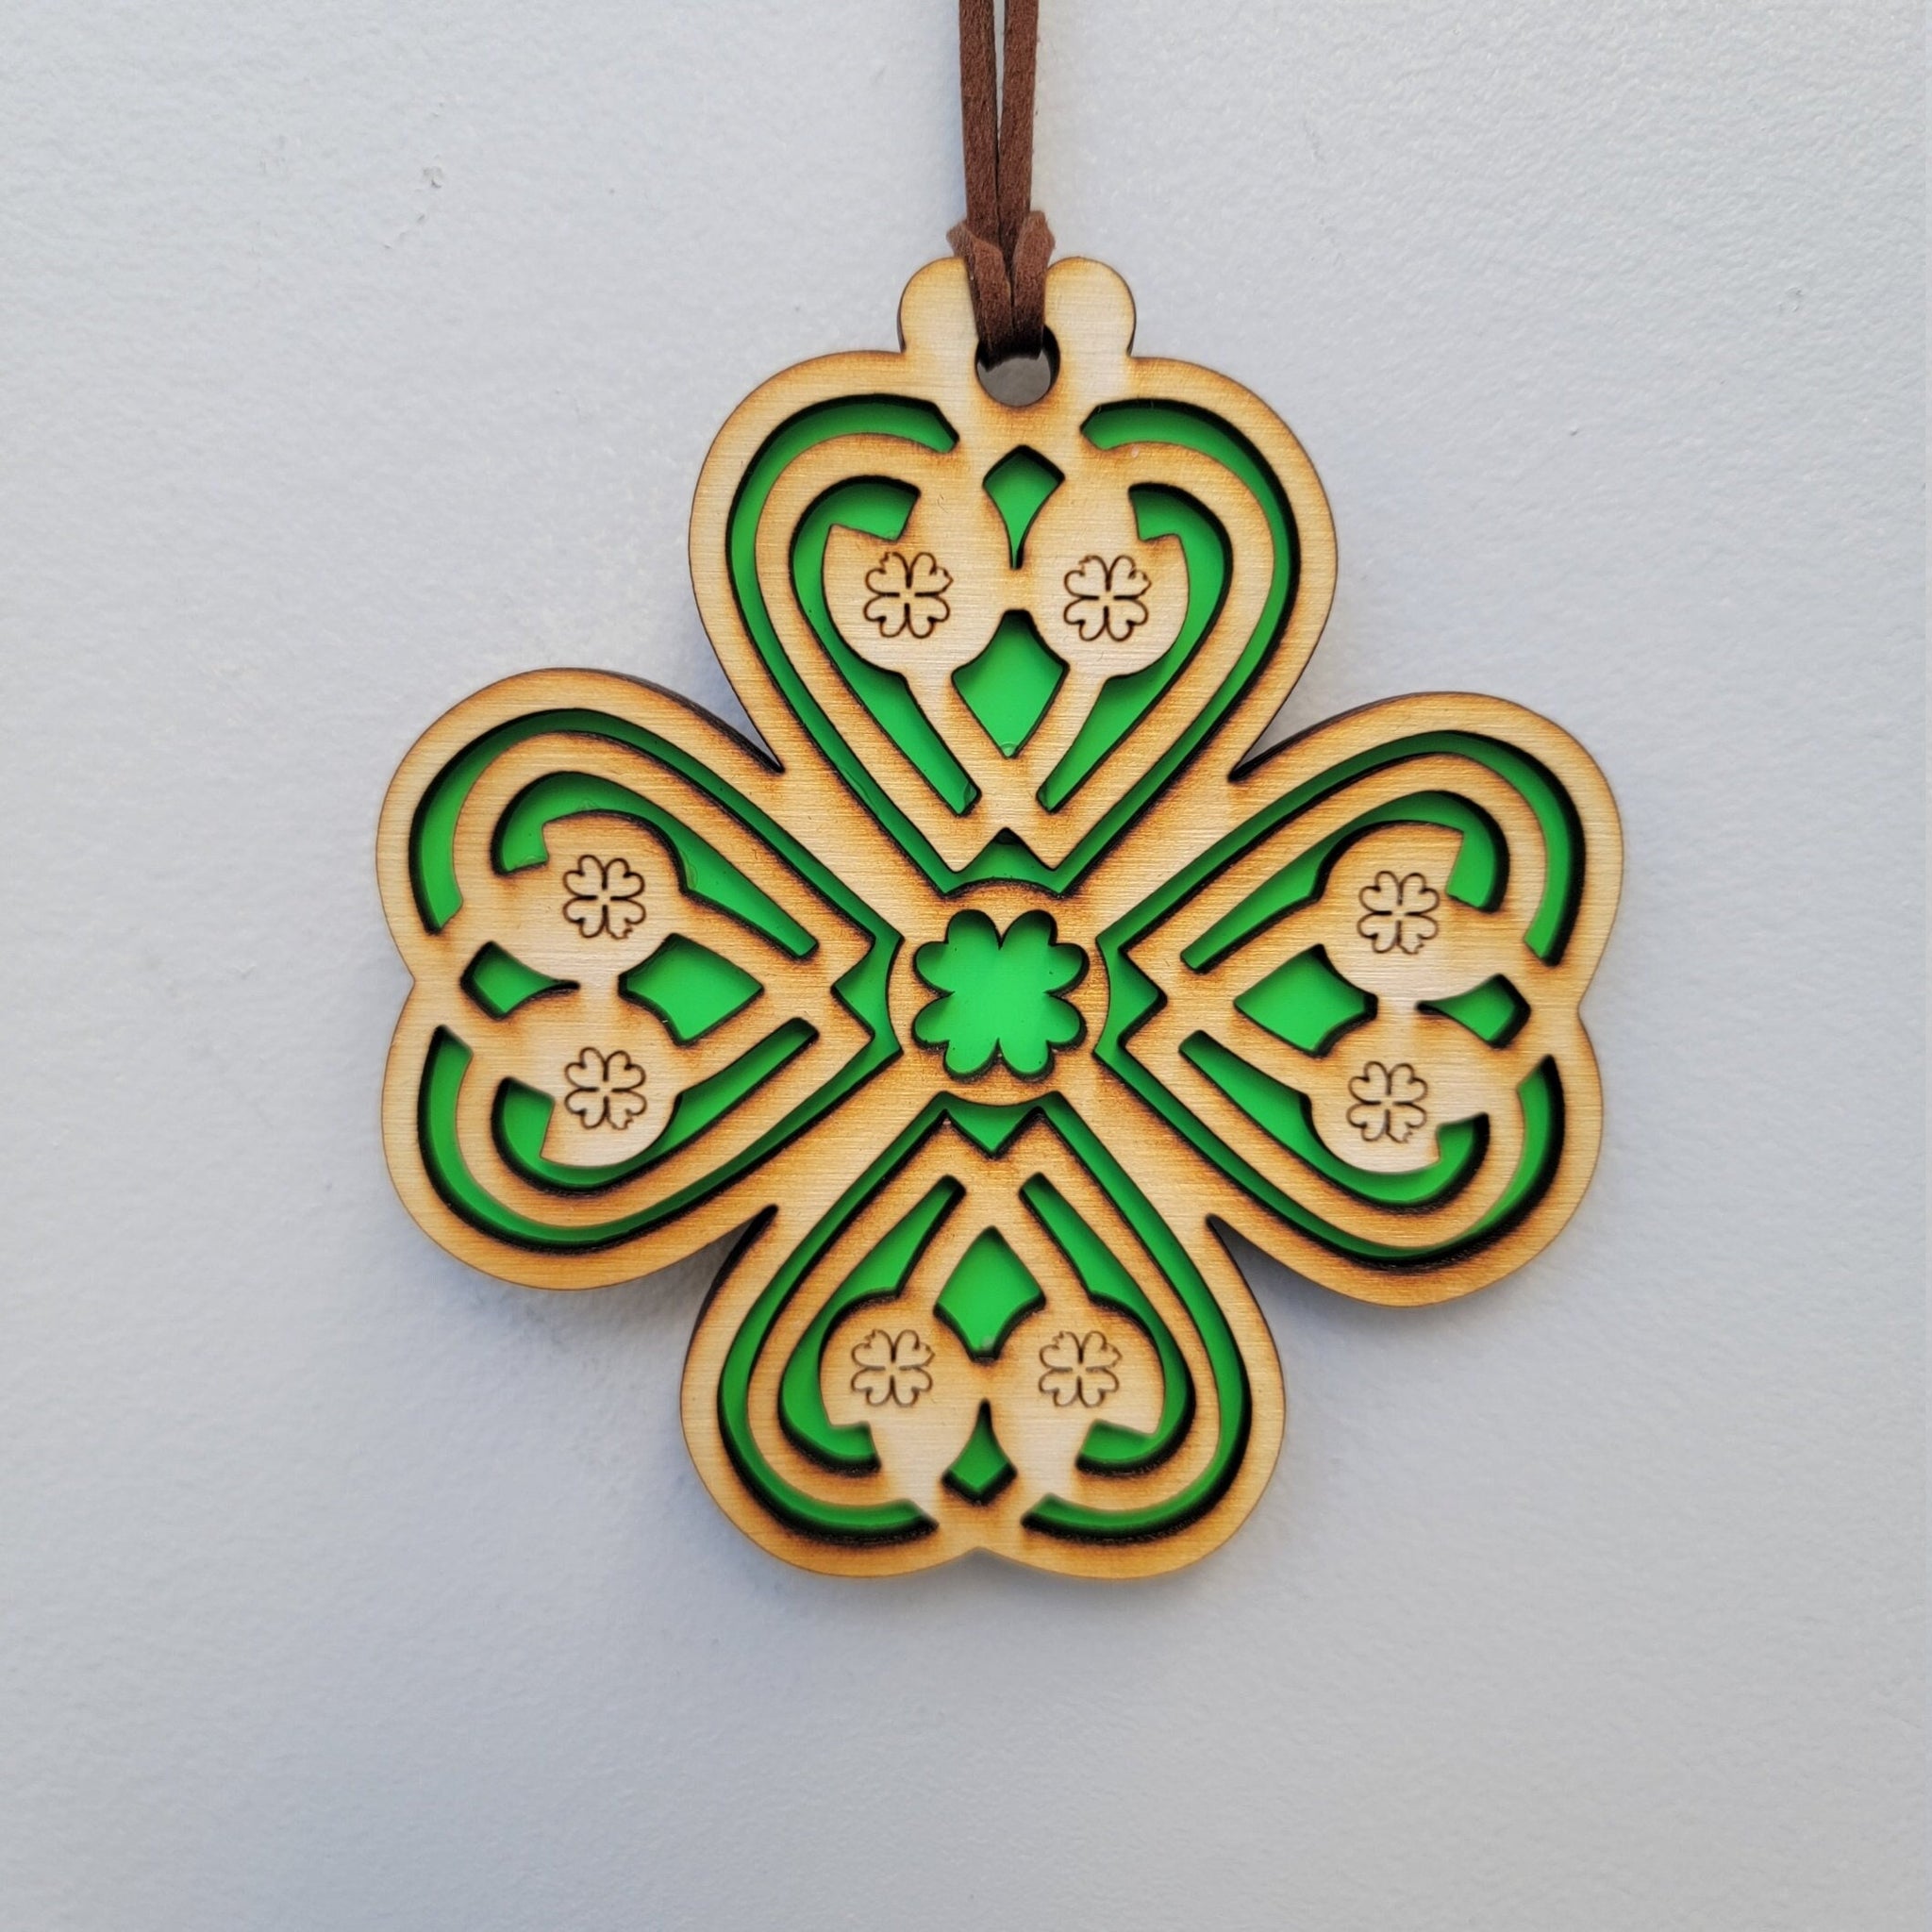 Wood Shamrock Celtic Ornament Wall Decoration Cross Saint Patrick's Day